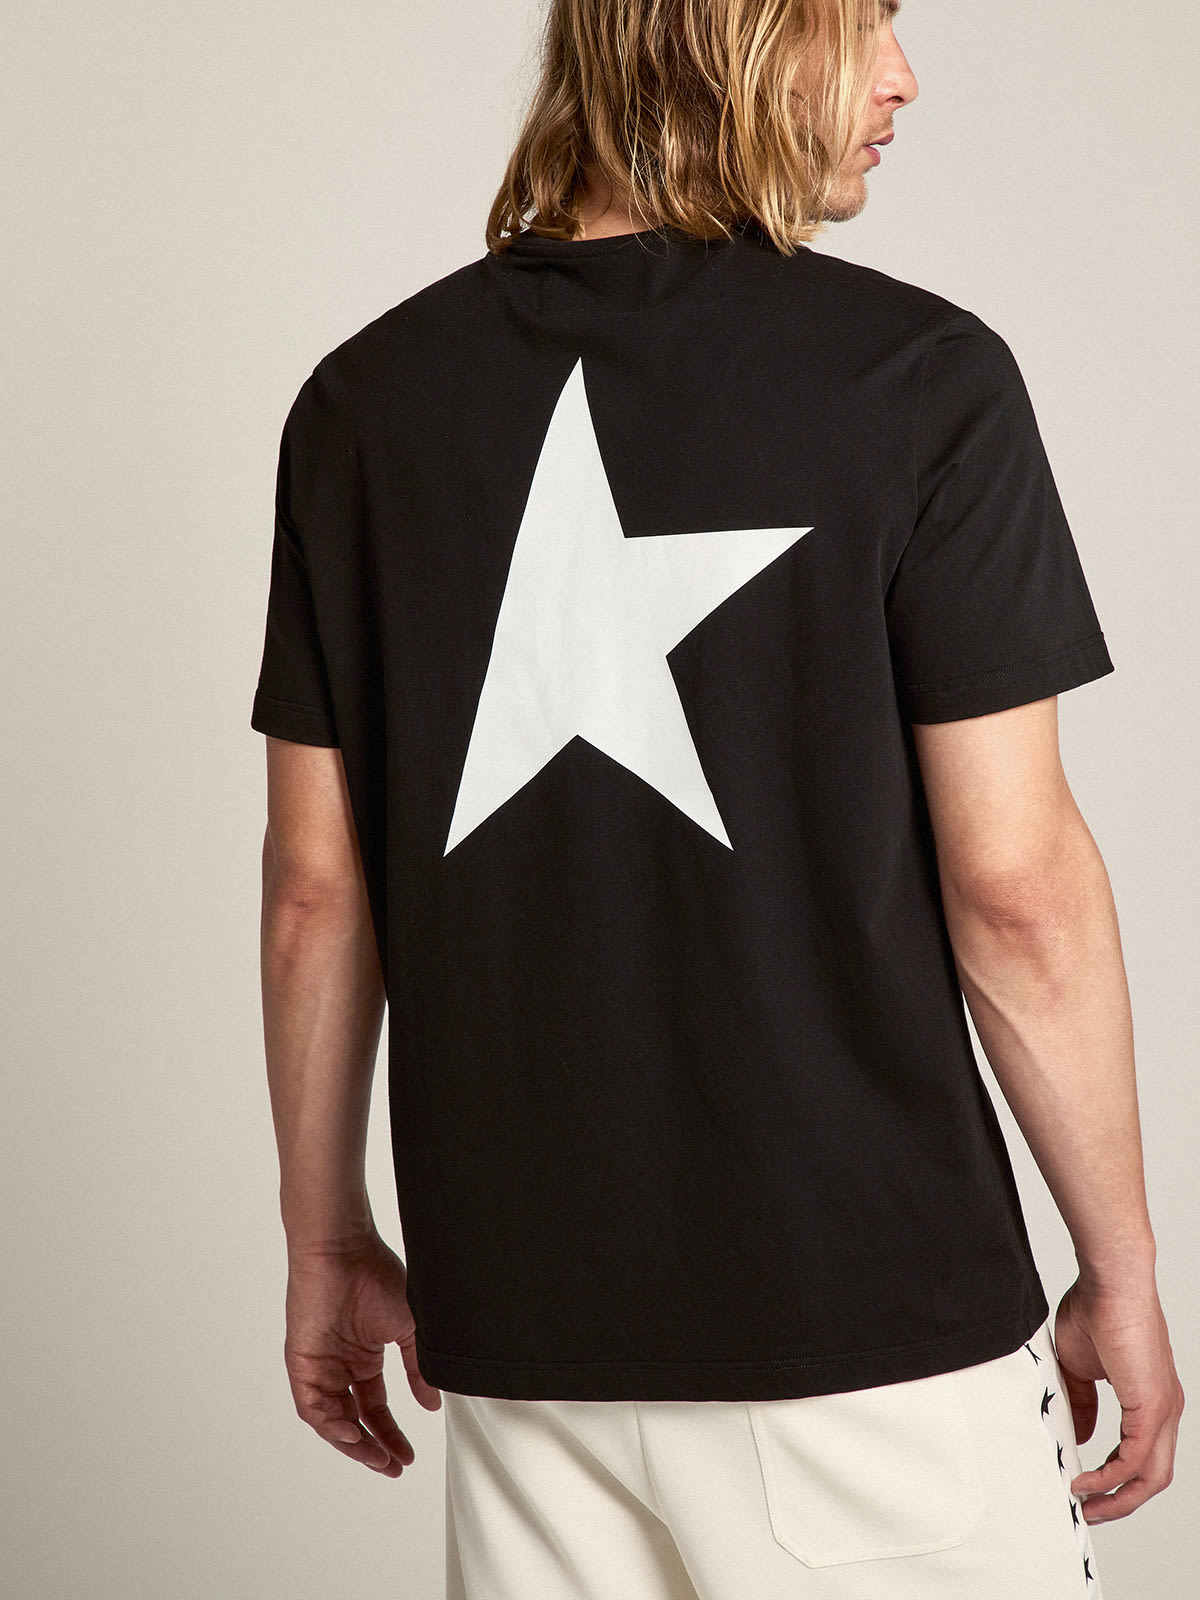 Golden Goose - T-shirt da uomo nera con logo e stella bianchi a contrasto in 